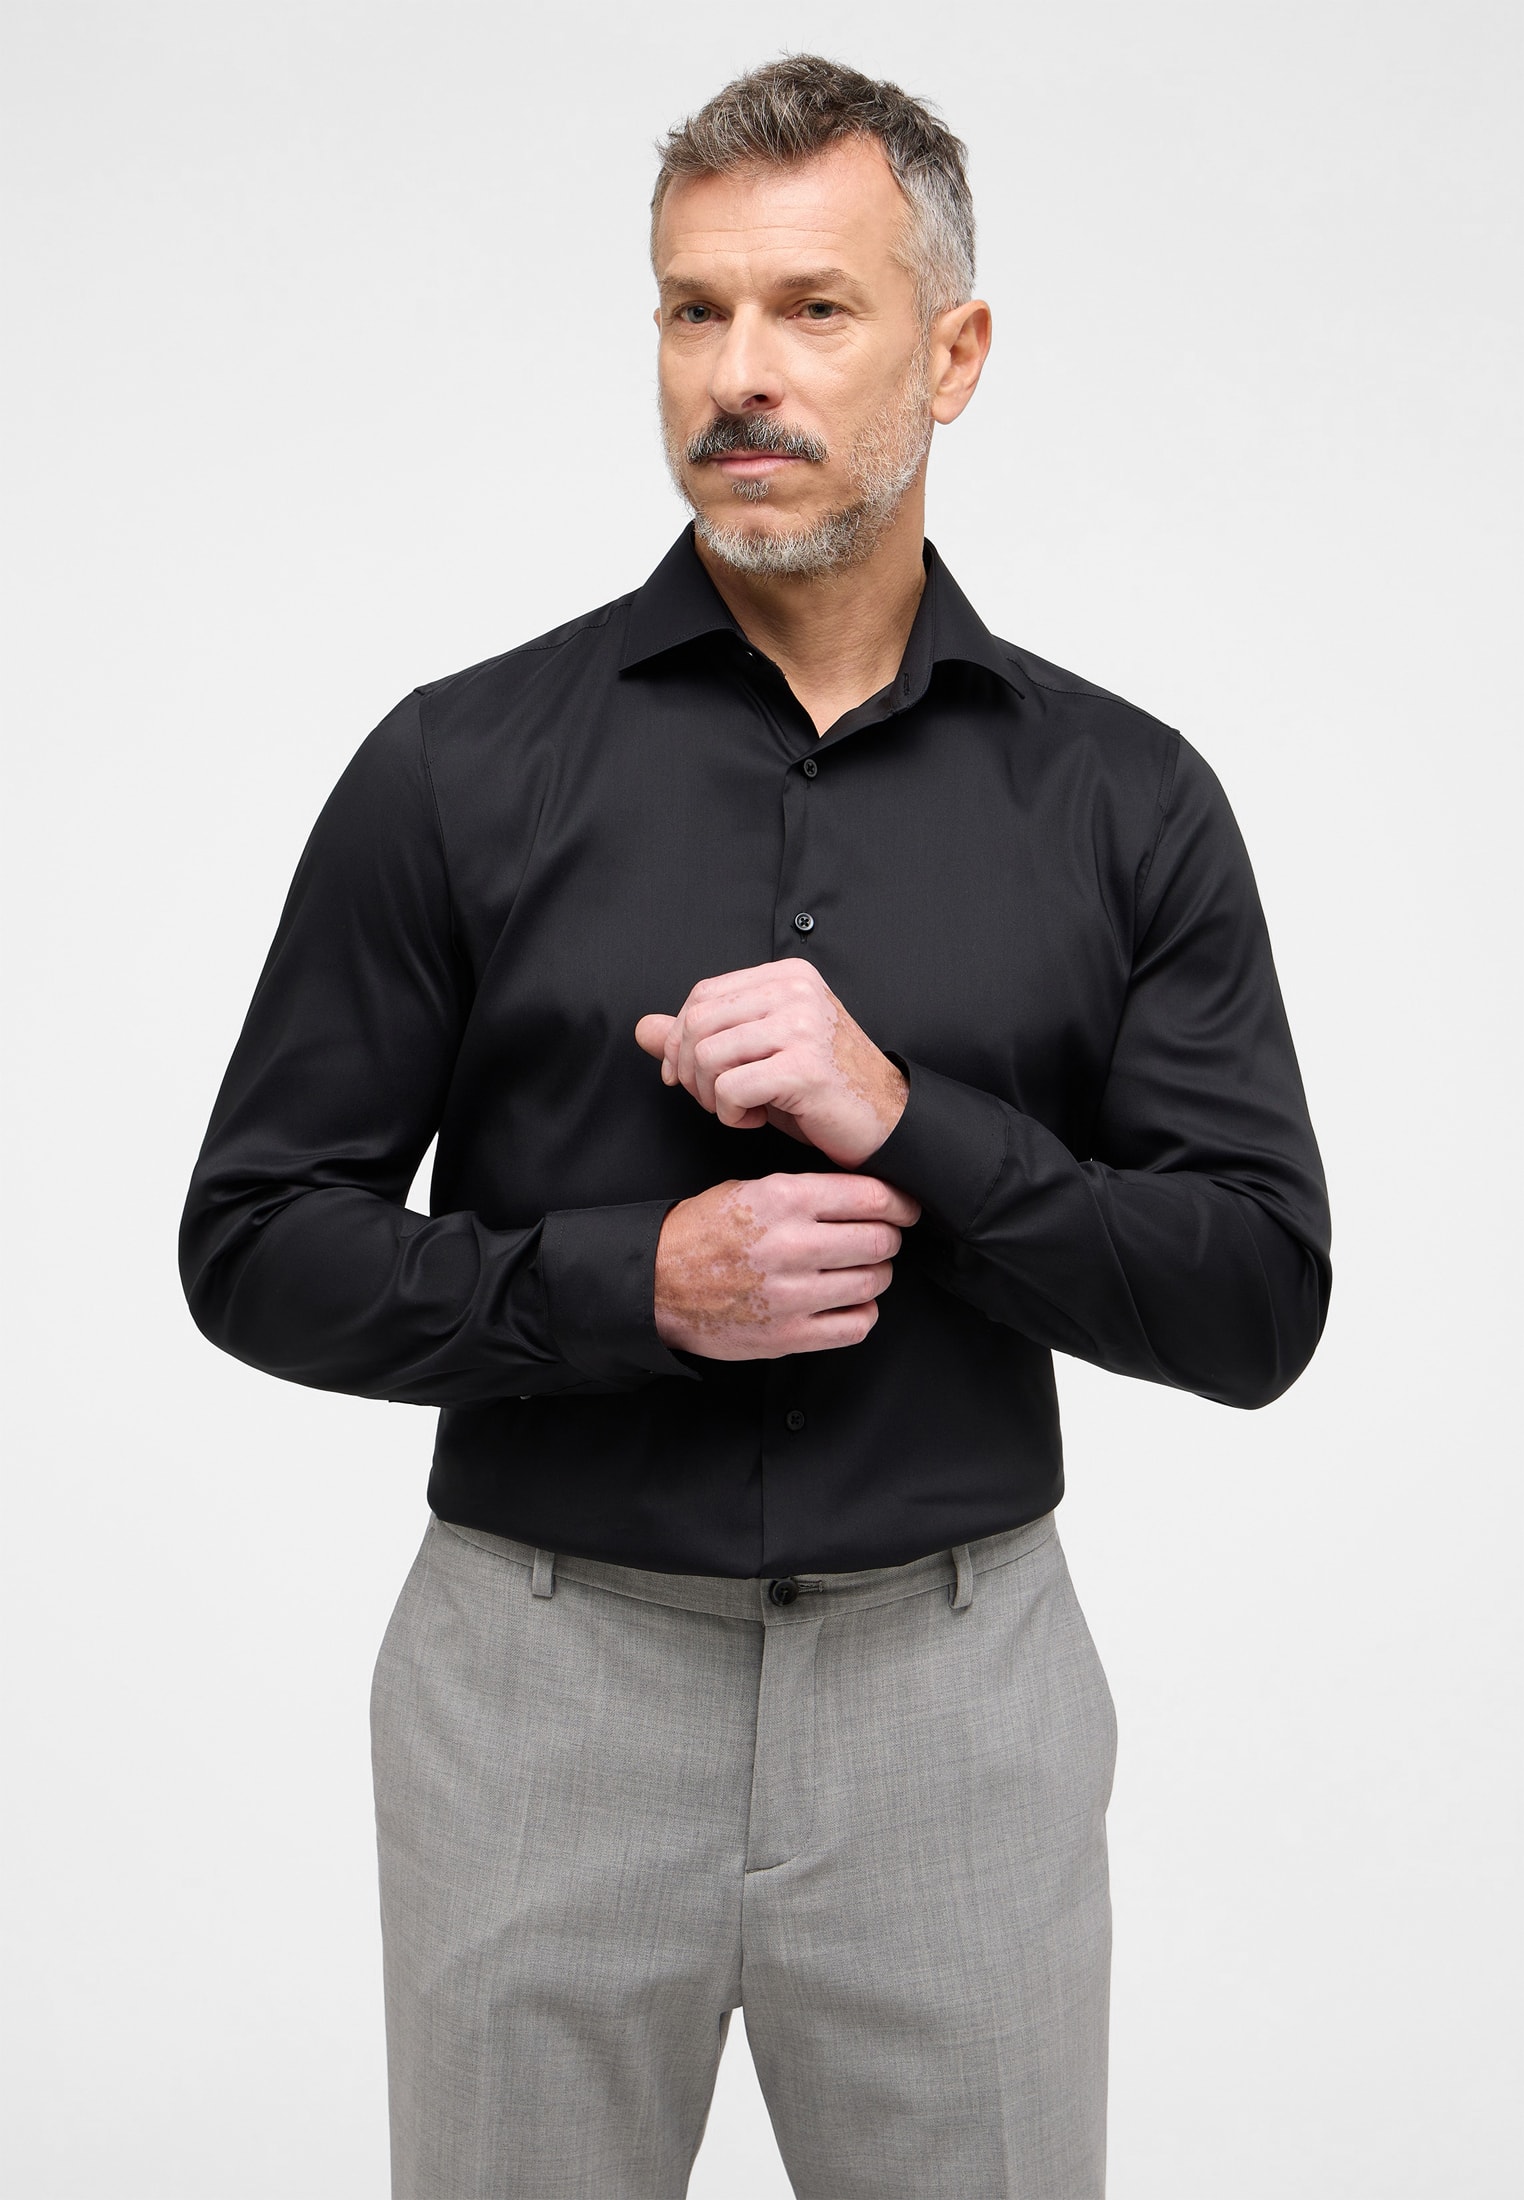 SLIM FIT Performance Shirt in black plain, black, 38, long sleeve